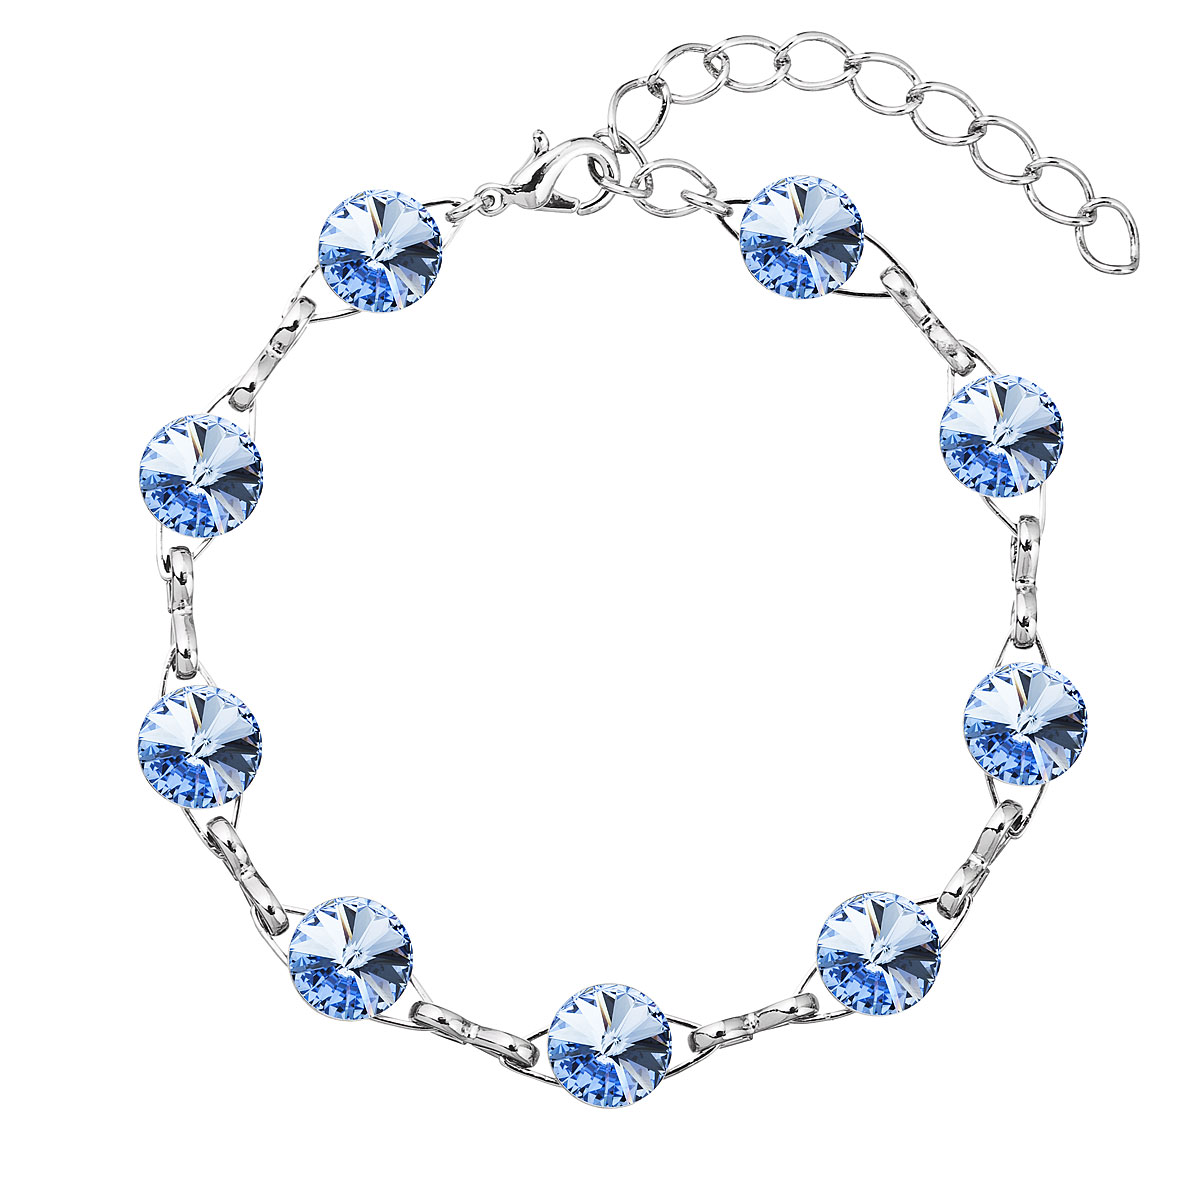 Evolution Group Náramek bižuterie se Swarovski krystaly modrý 53001.3 light sapphire